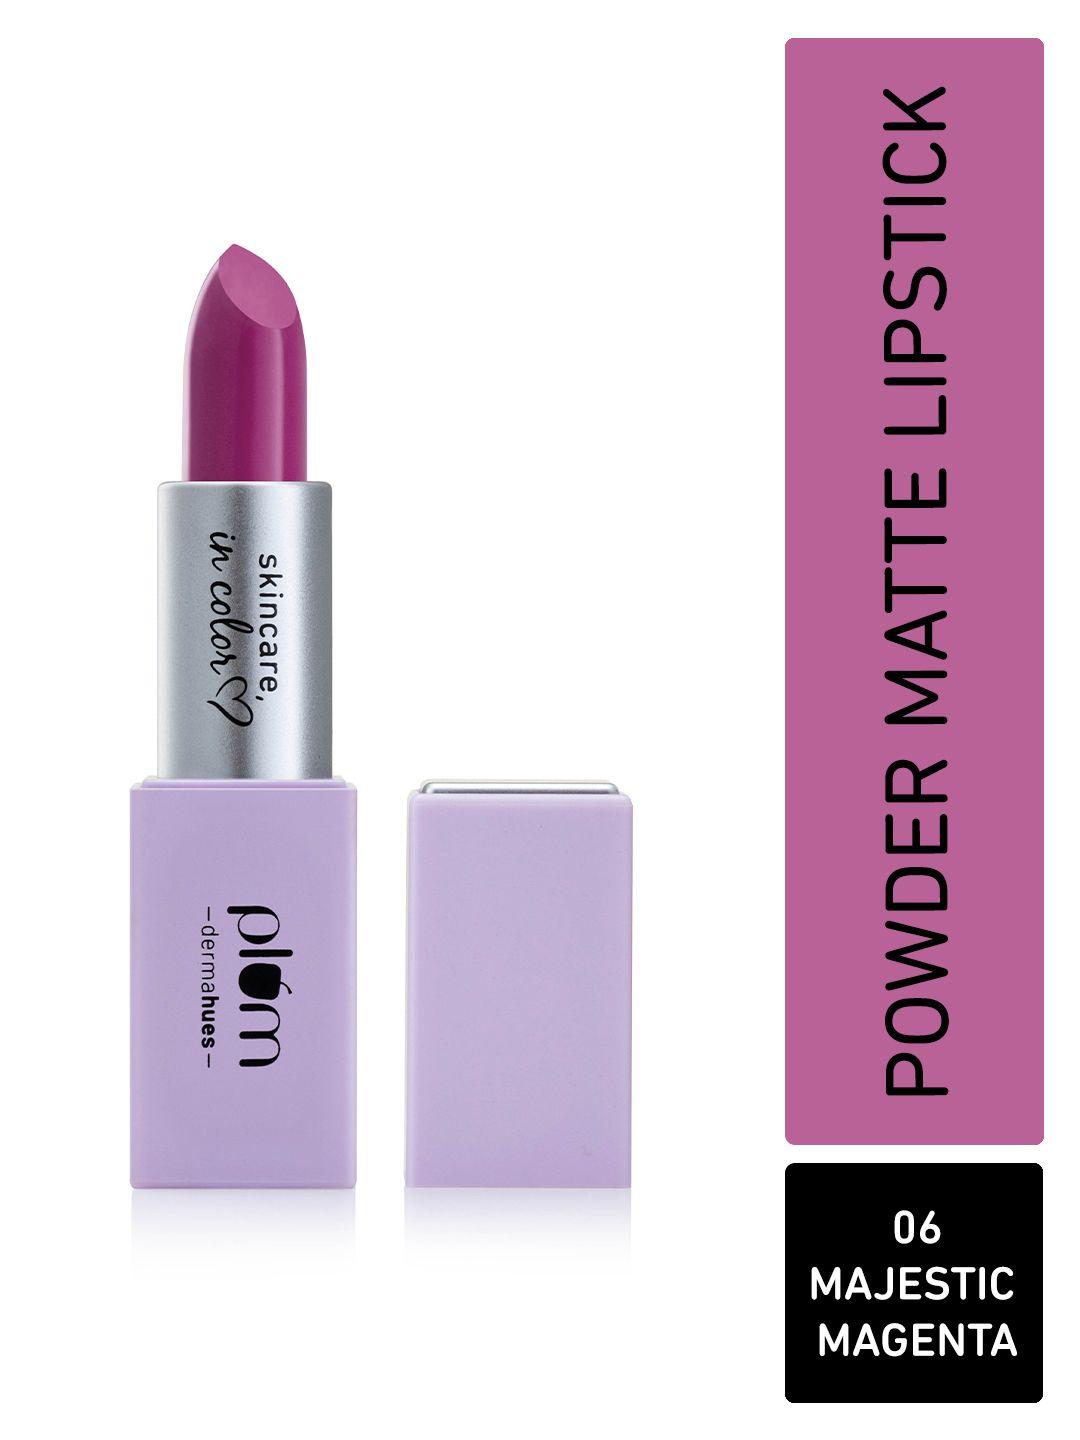 plum velvet haze long lasting powder matte lipstick - 4.2g - majestic magenta 06